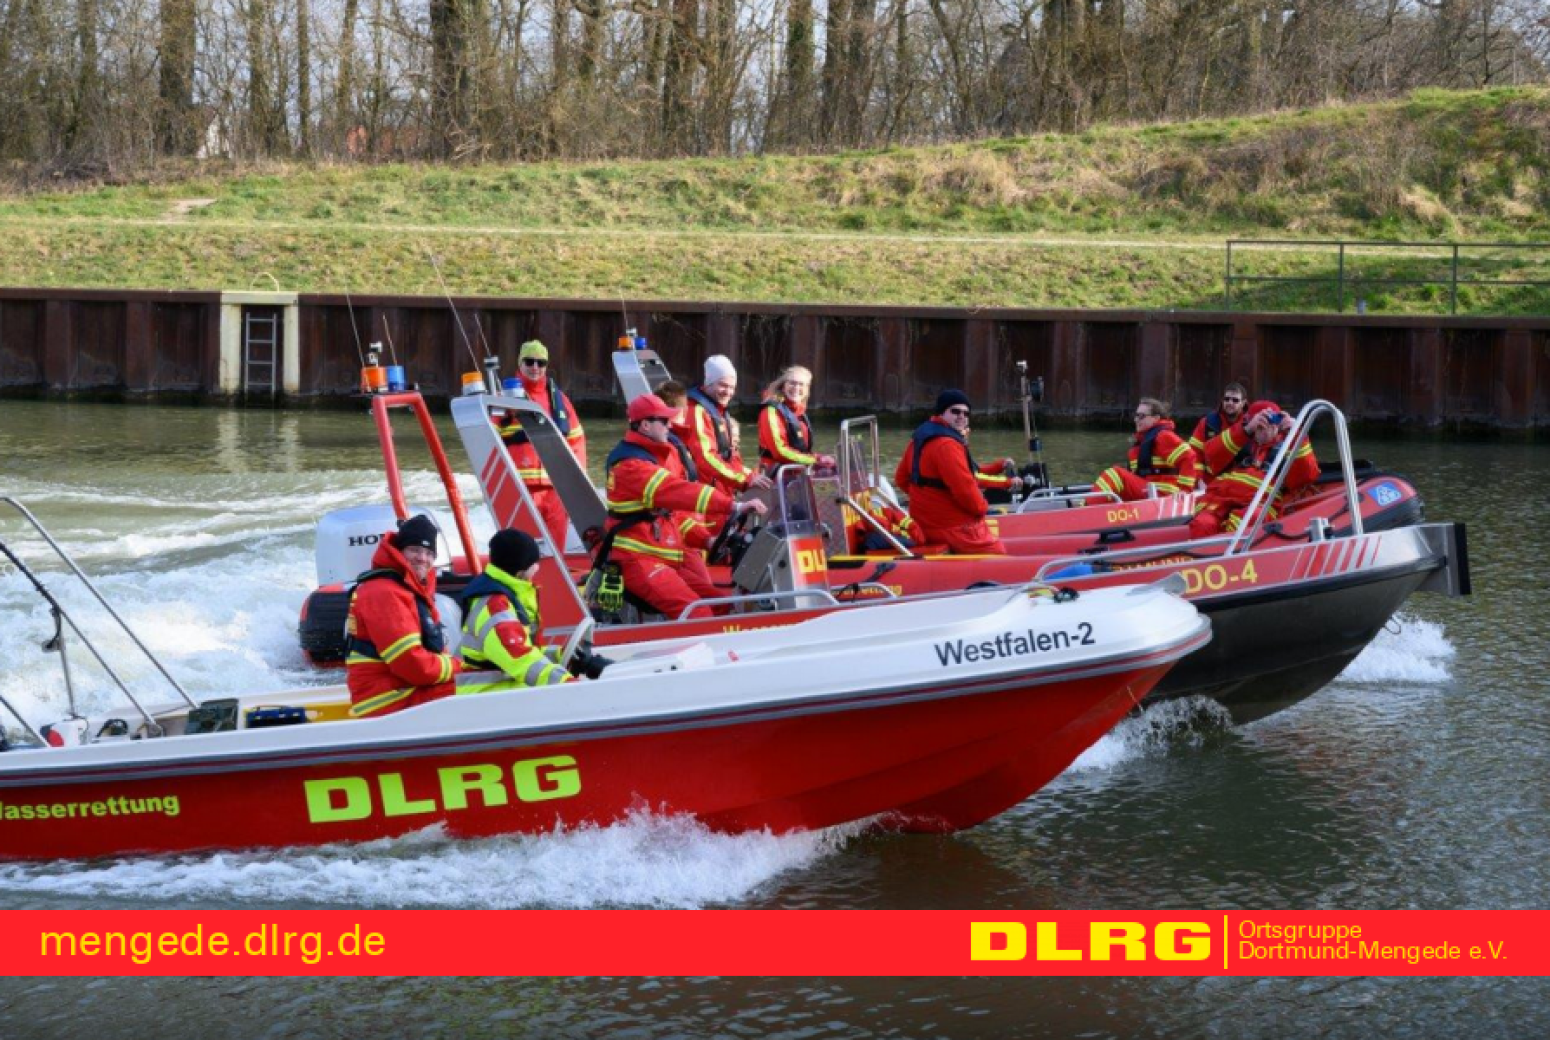 Bootsfahrt des DLRG Ortsgruppe Dortmund Mengede e.V. auf dem Kanal